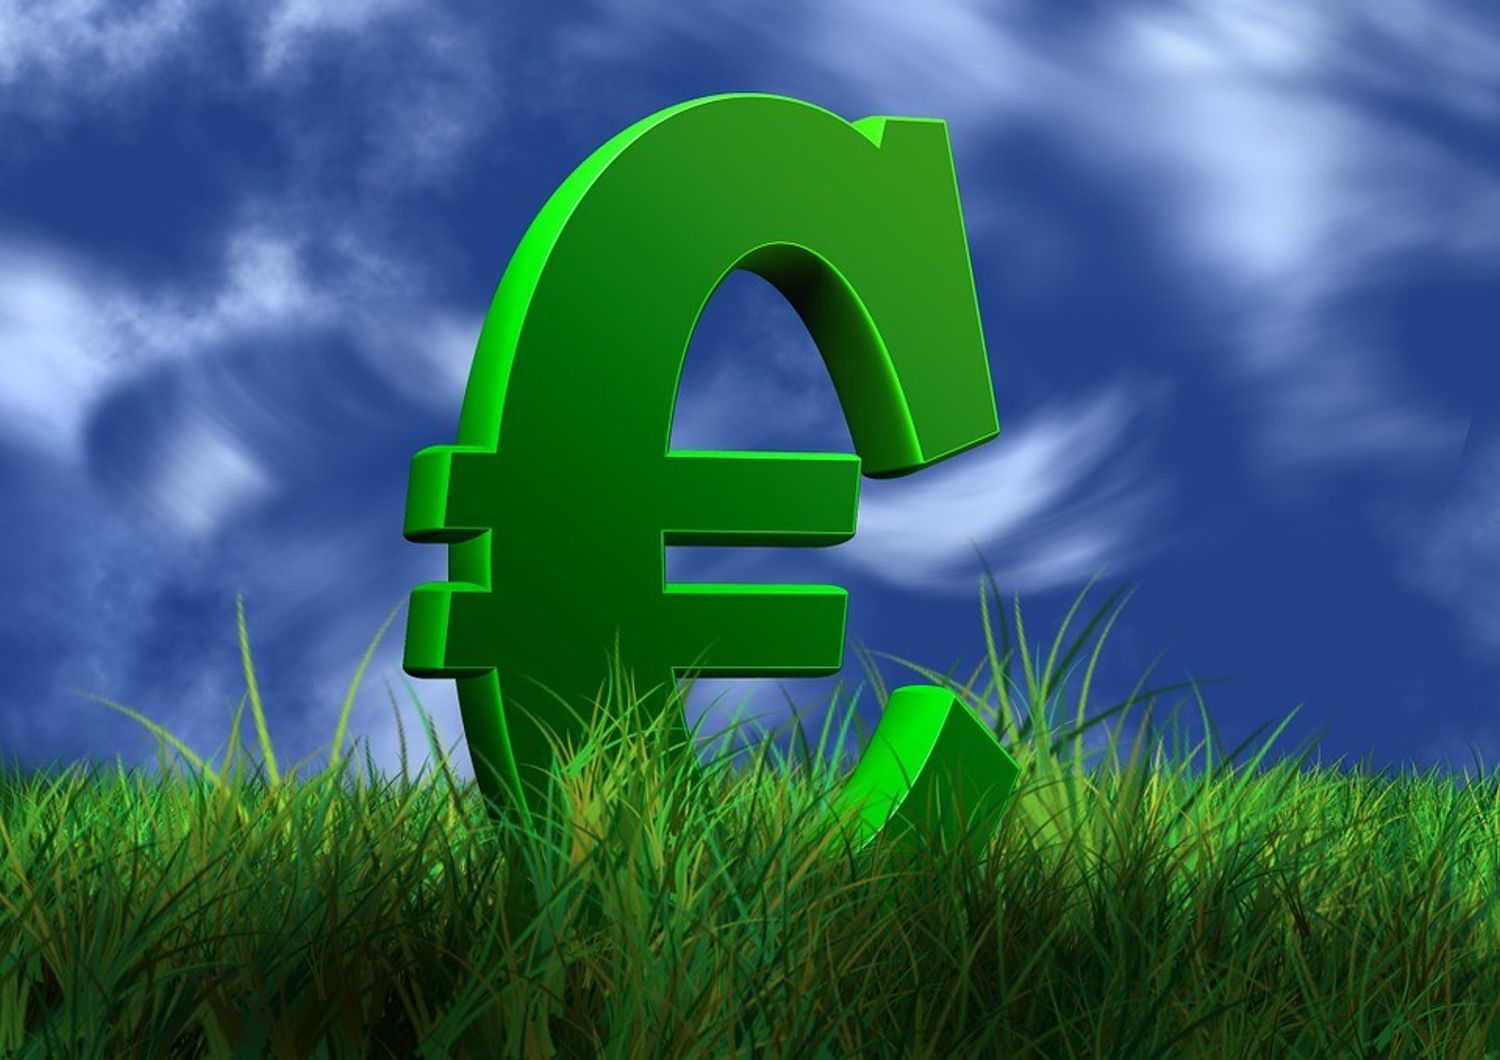 &nbsp;Euro (pixabay)